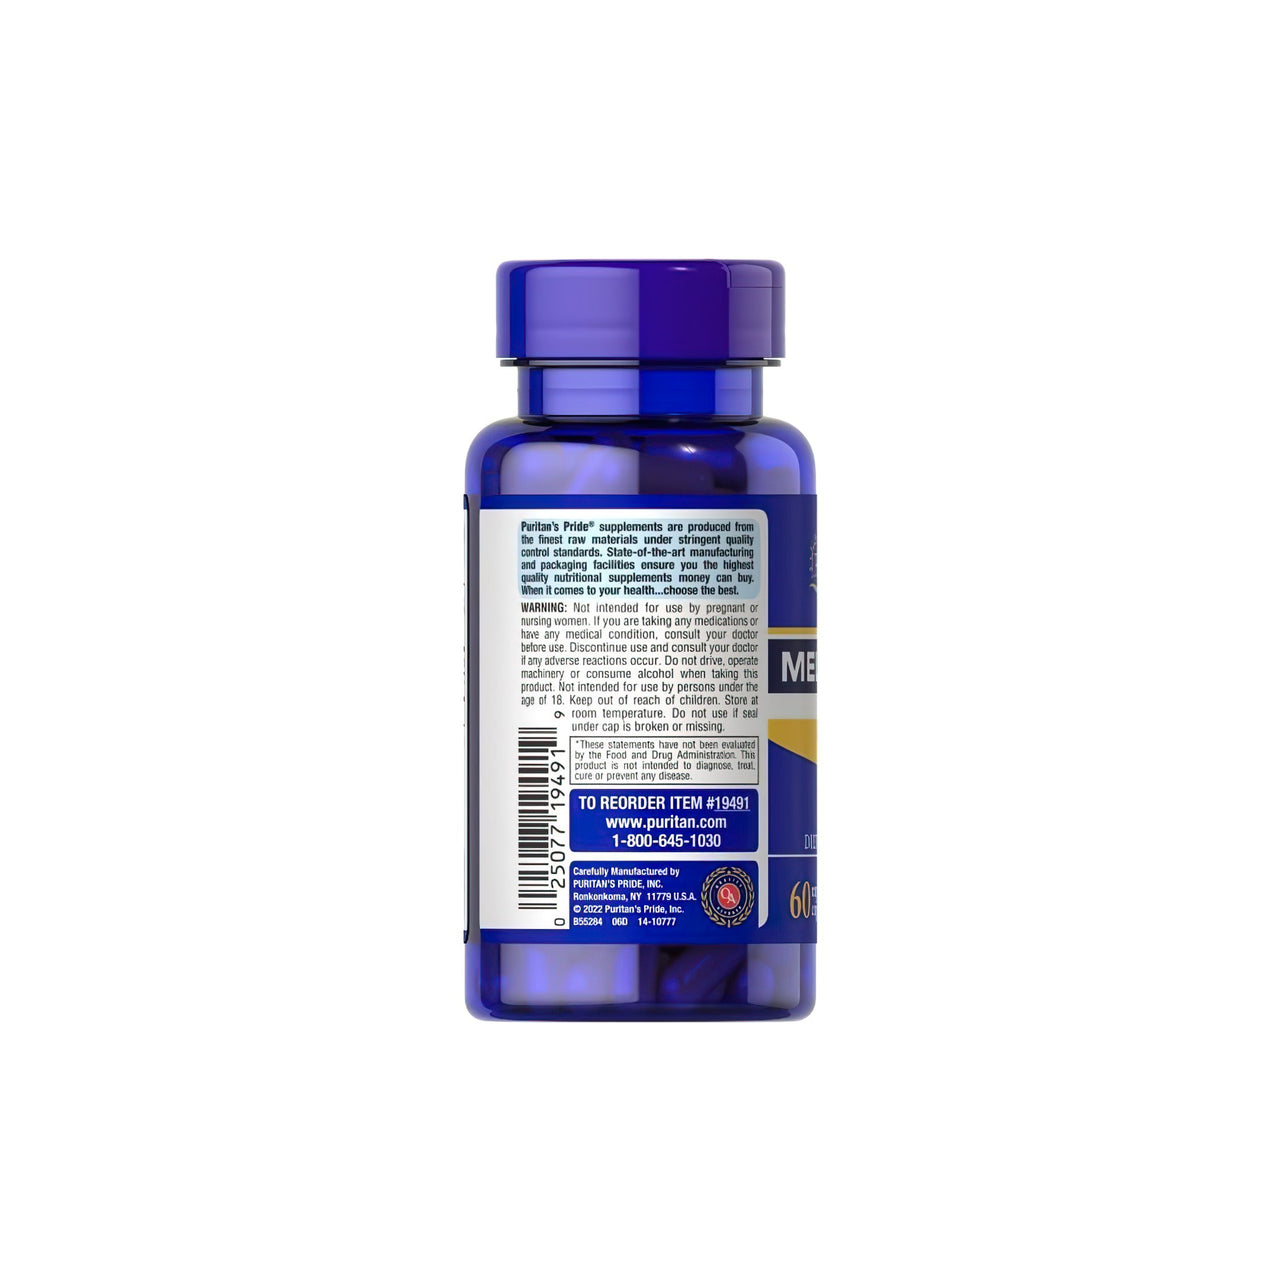 The back of a bottle of Puritan's Pride Melatonin 10 mg 60 rapid release capsules.